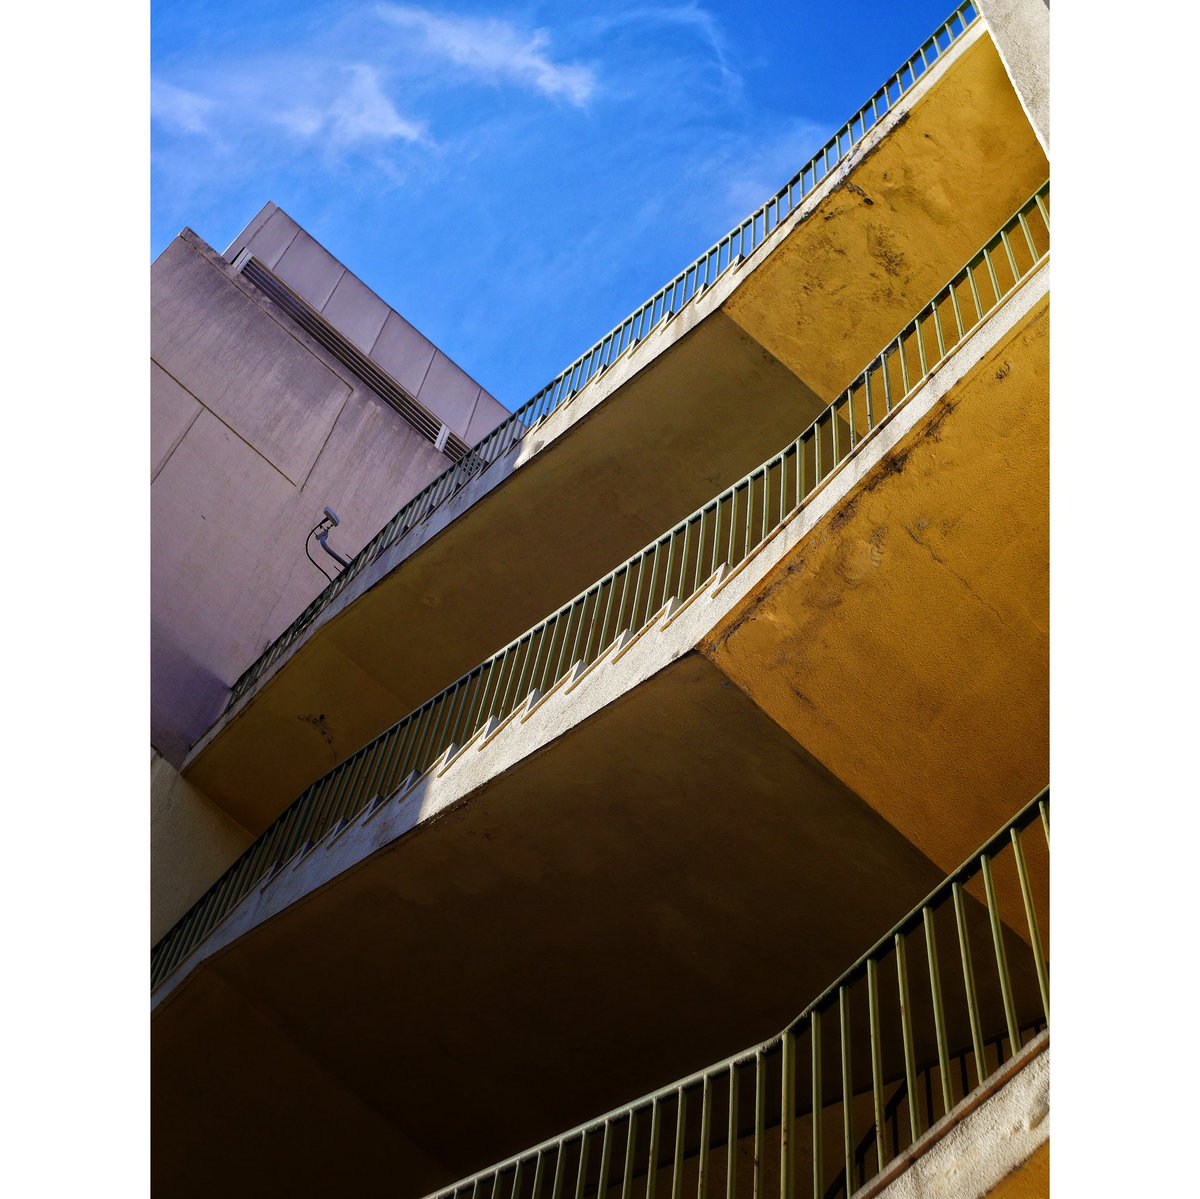 distorted straight line
#街歩き
#scene
#建物 #buildings
#階段 #stairs
#空 #skies
#路傍 #roadside
#panasonic #lumix #lumixg6 #dmcg6 #g6  #microfourthirds #m43
#smc #smcpentaxm #pentaxm #pentaxm4028 #kmount #pk_m43adapter
#singlefocuslens #mflens #oldlens
#retouched
#snapseedapp